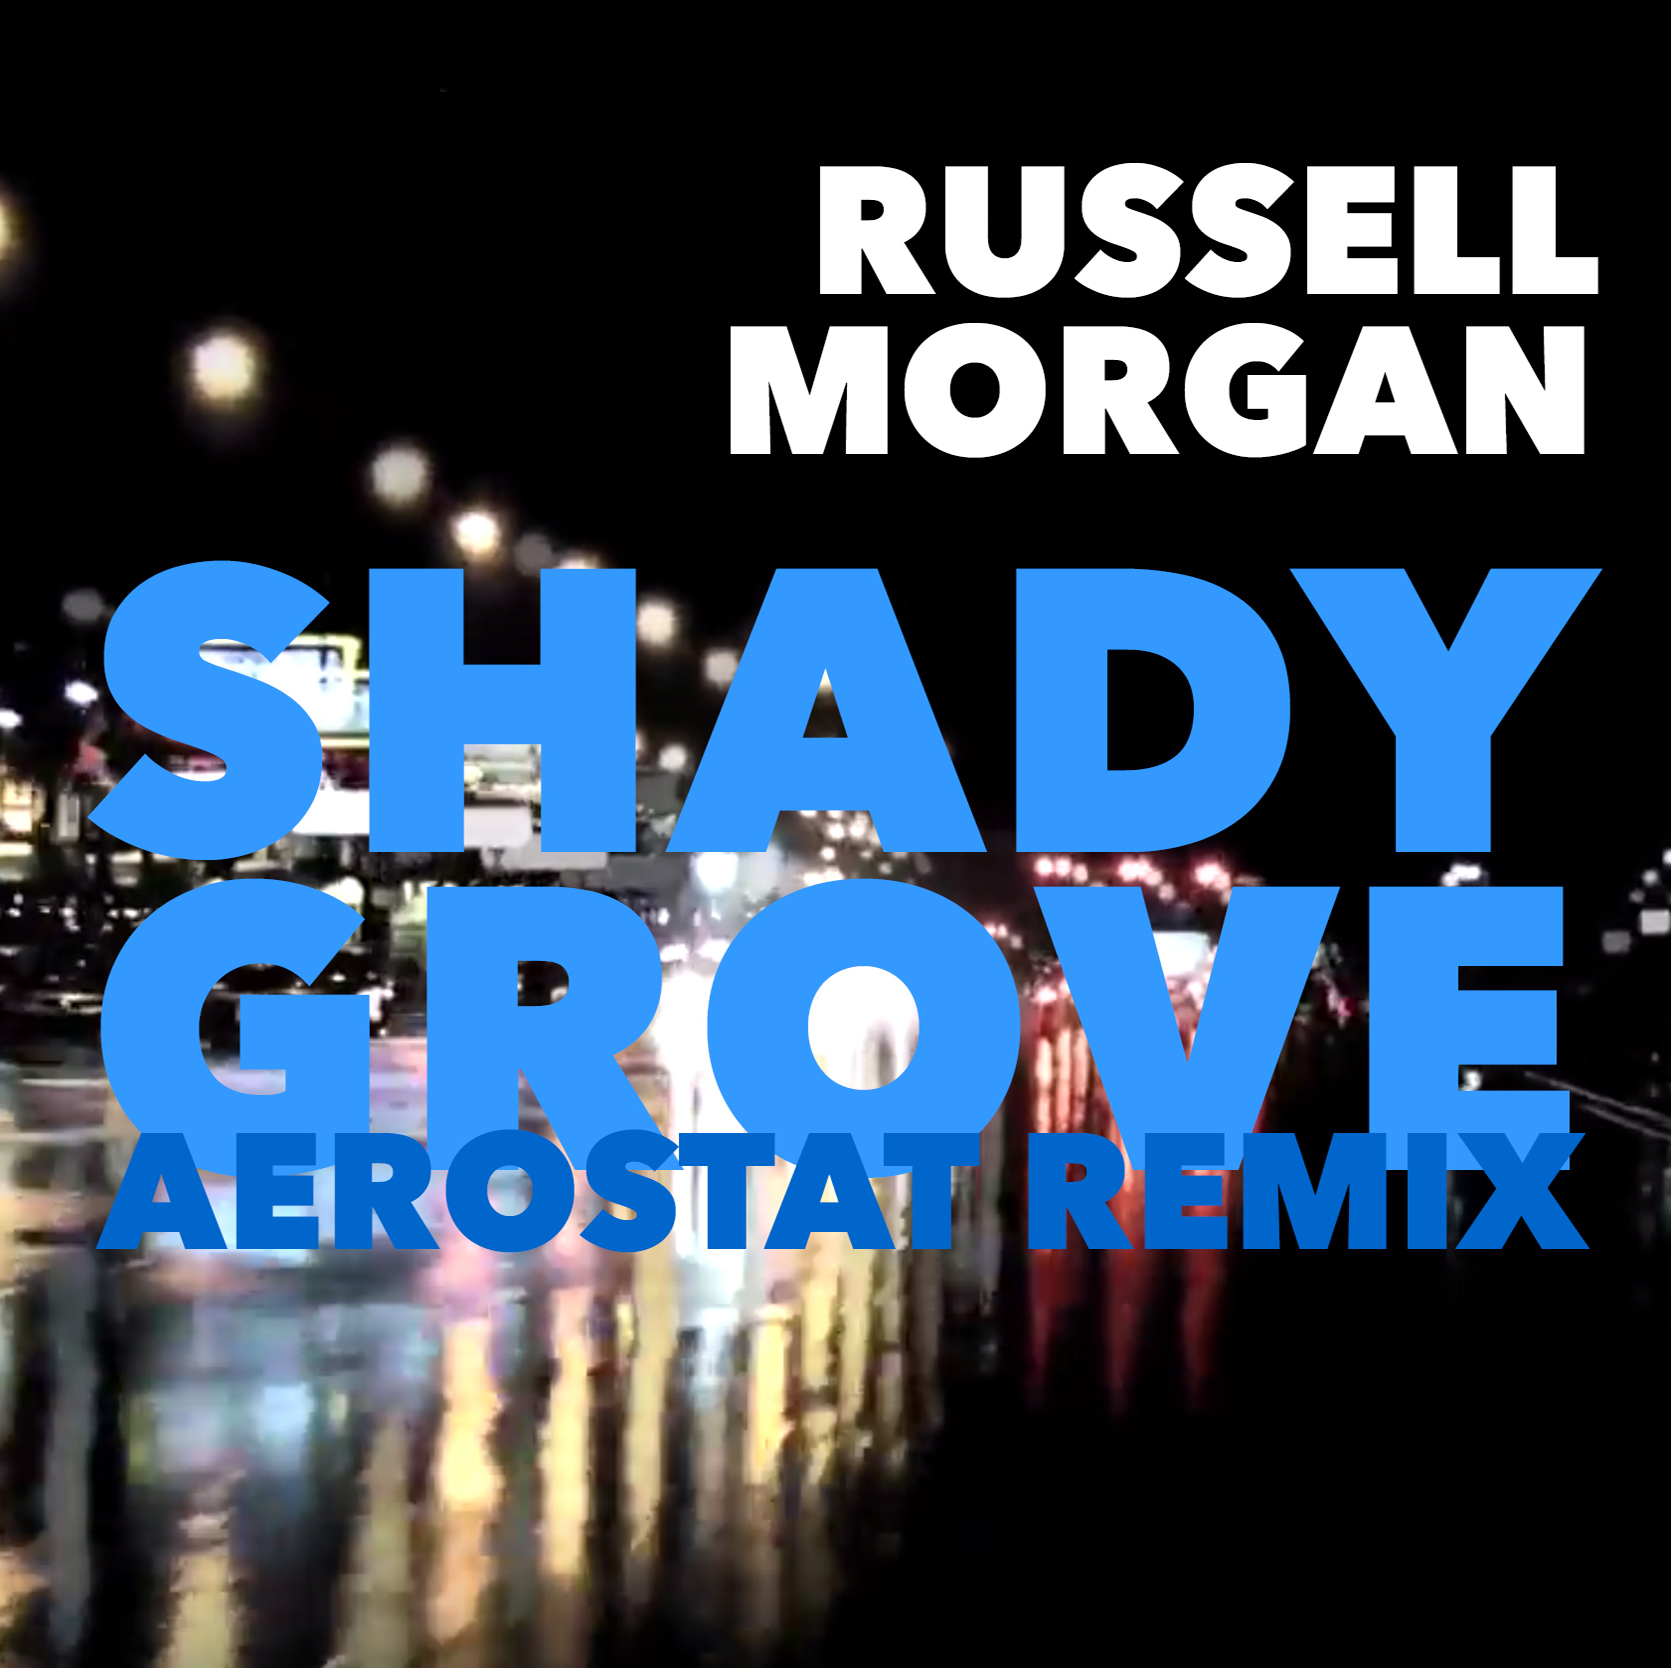 Artwork. Russell Morgan - Shady Grove (Aerostat Remix).